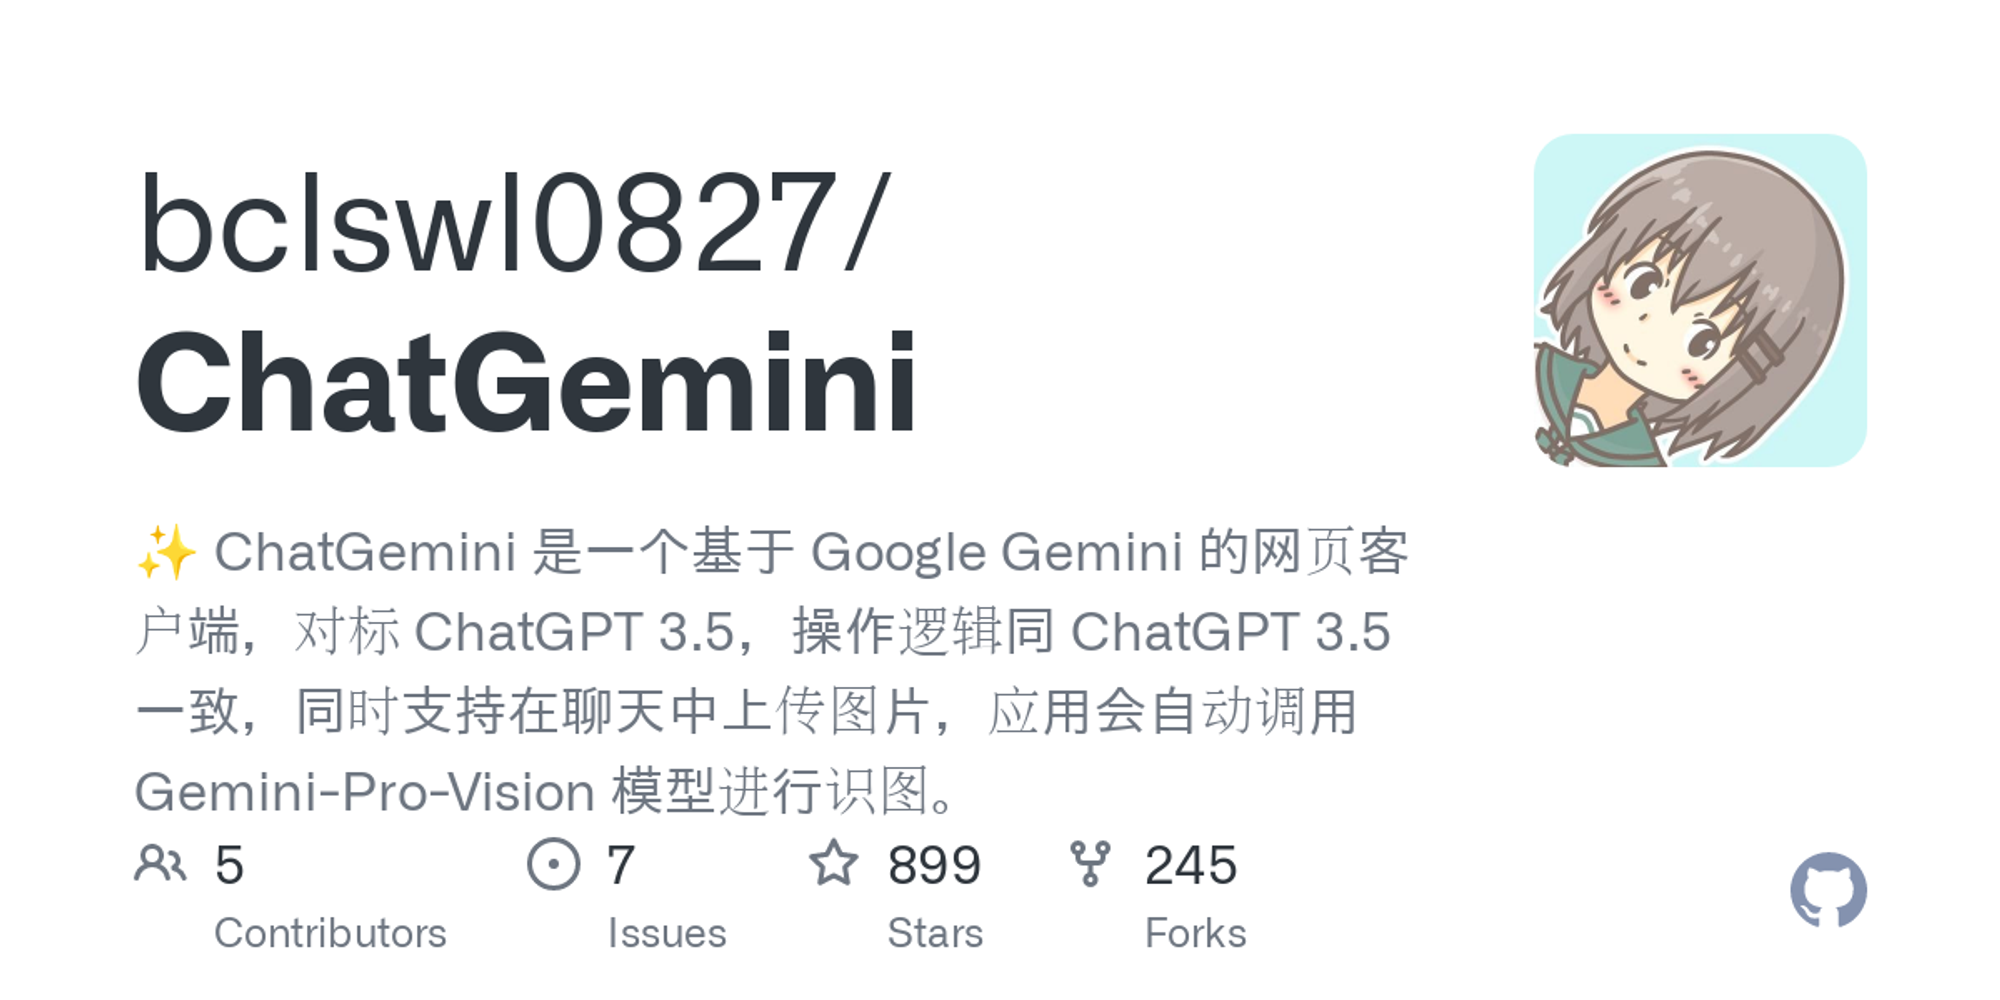 GitHub - bclswl0827/ChatGemini: ✨ ChatGemini 是一个基于 Google Gemini 的网页客户端，对标 ChatGPT 3.5，操作逻辑同 ChatGPT 3.5 一致，同时支持在聊天中上传图片，应用会自动调用 Gemini-Pro-Vision 模型进行识图。